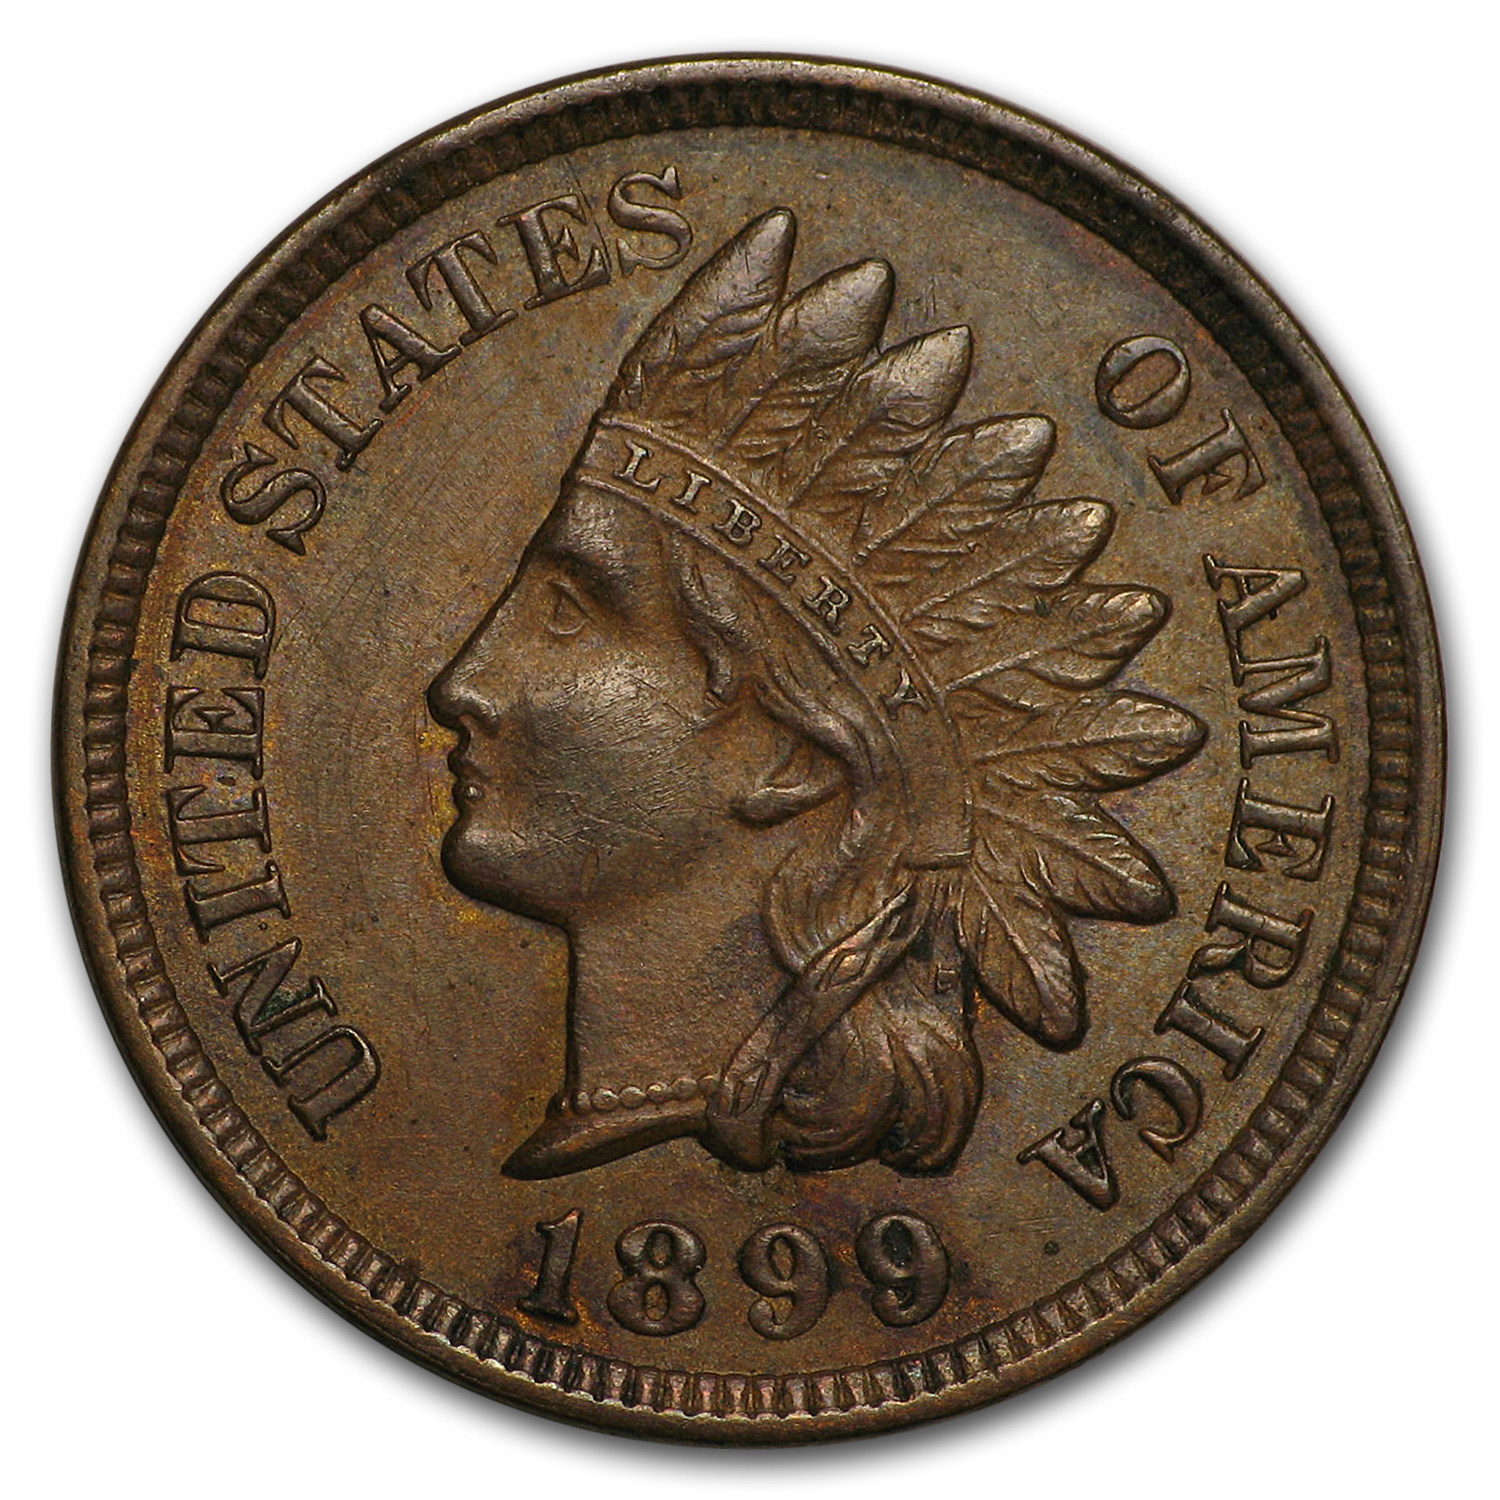 Buy 1899 Indian Head Cent AU